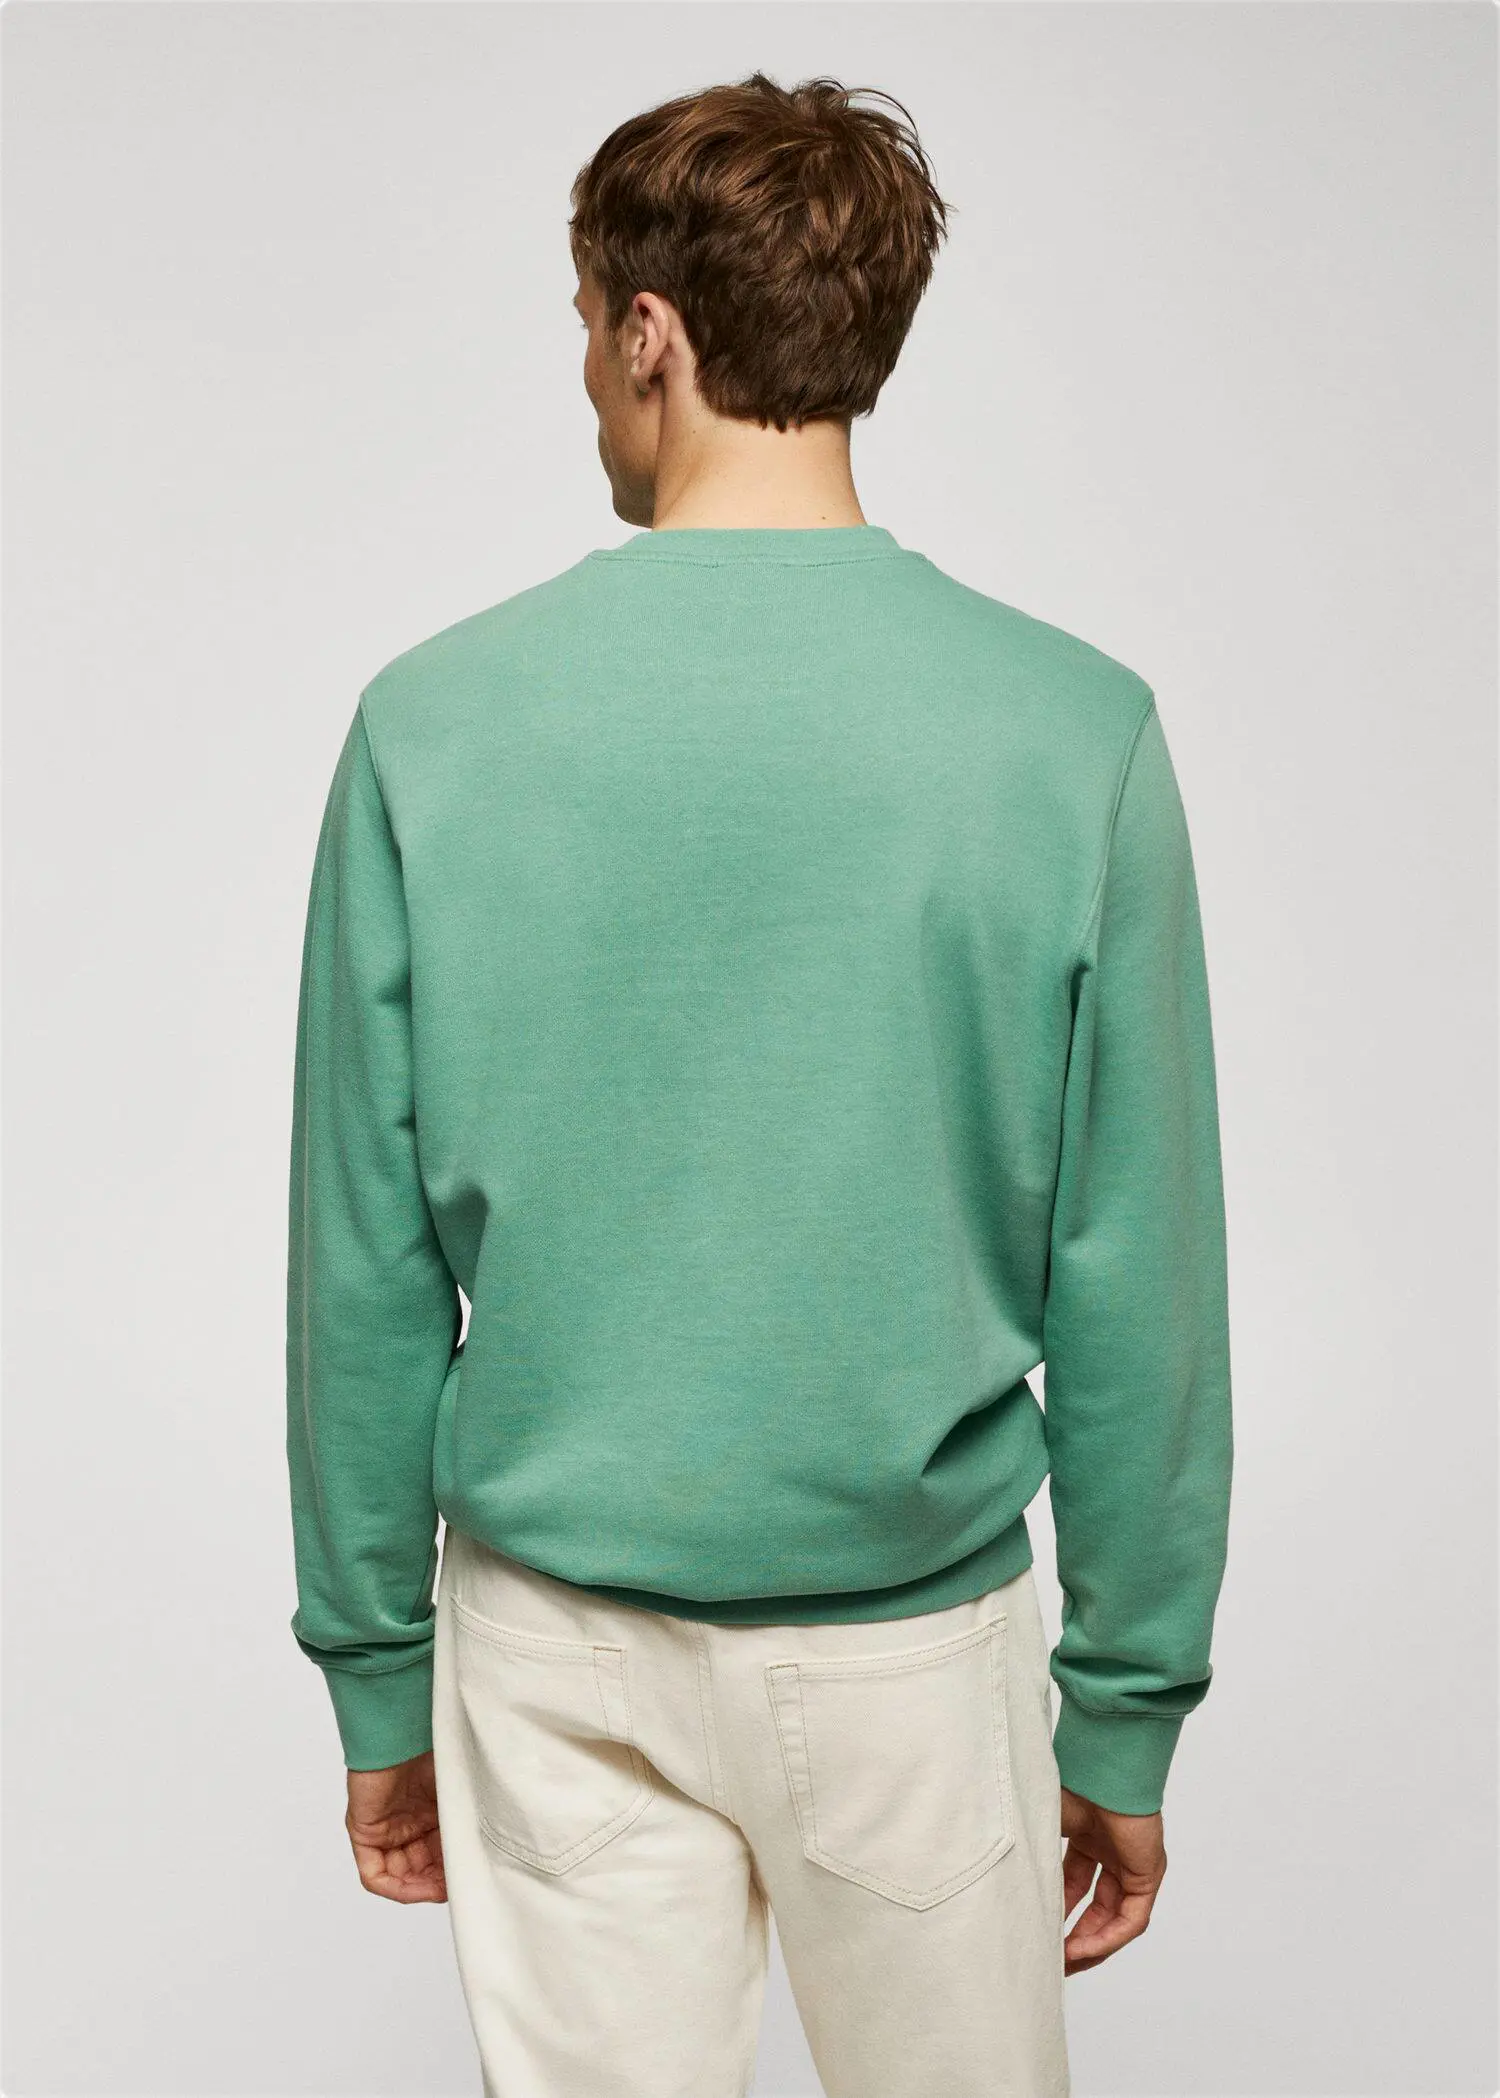 Mango 100% cotton basic sweatshirt . a man wearing a green sweatshirt standing in front of a white wall. 